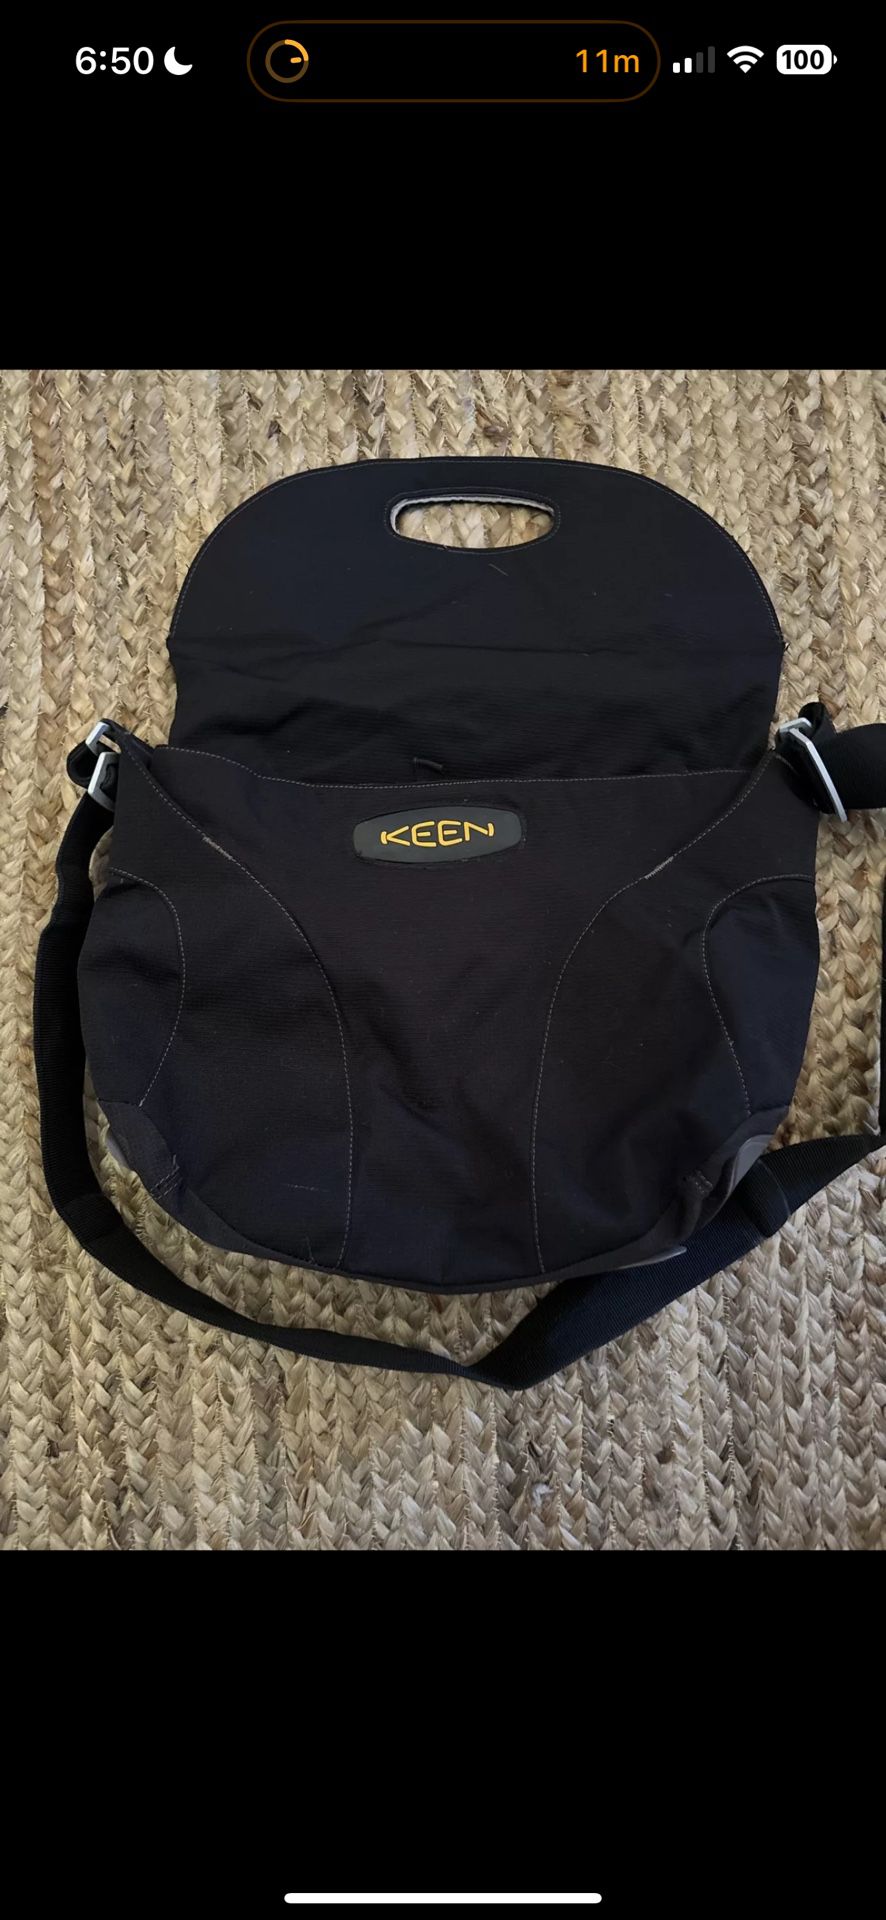 Keen Laptop Messenger Bag Weather Proof Cross Body Bag Rubber Bottom